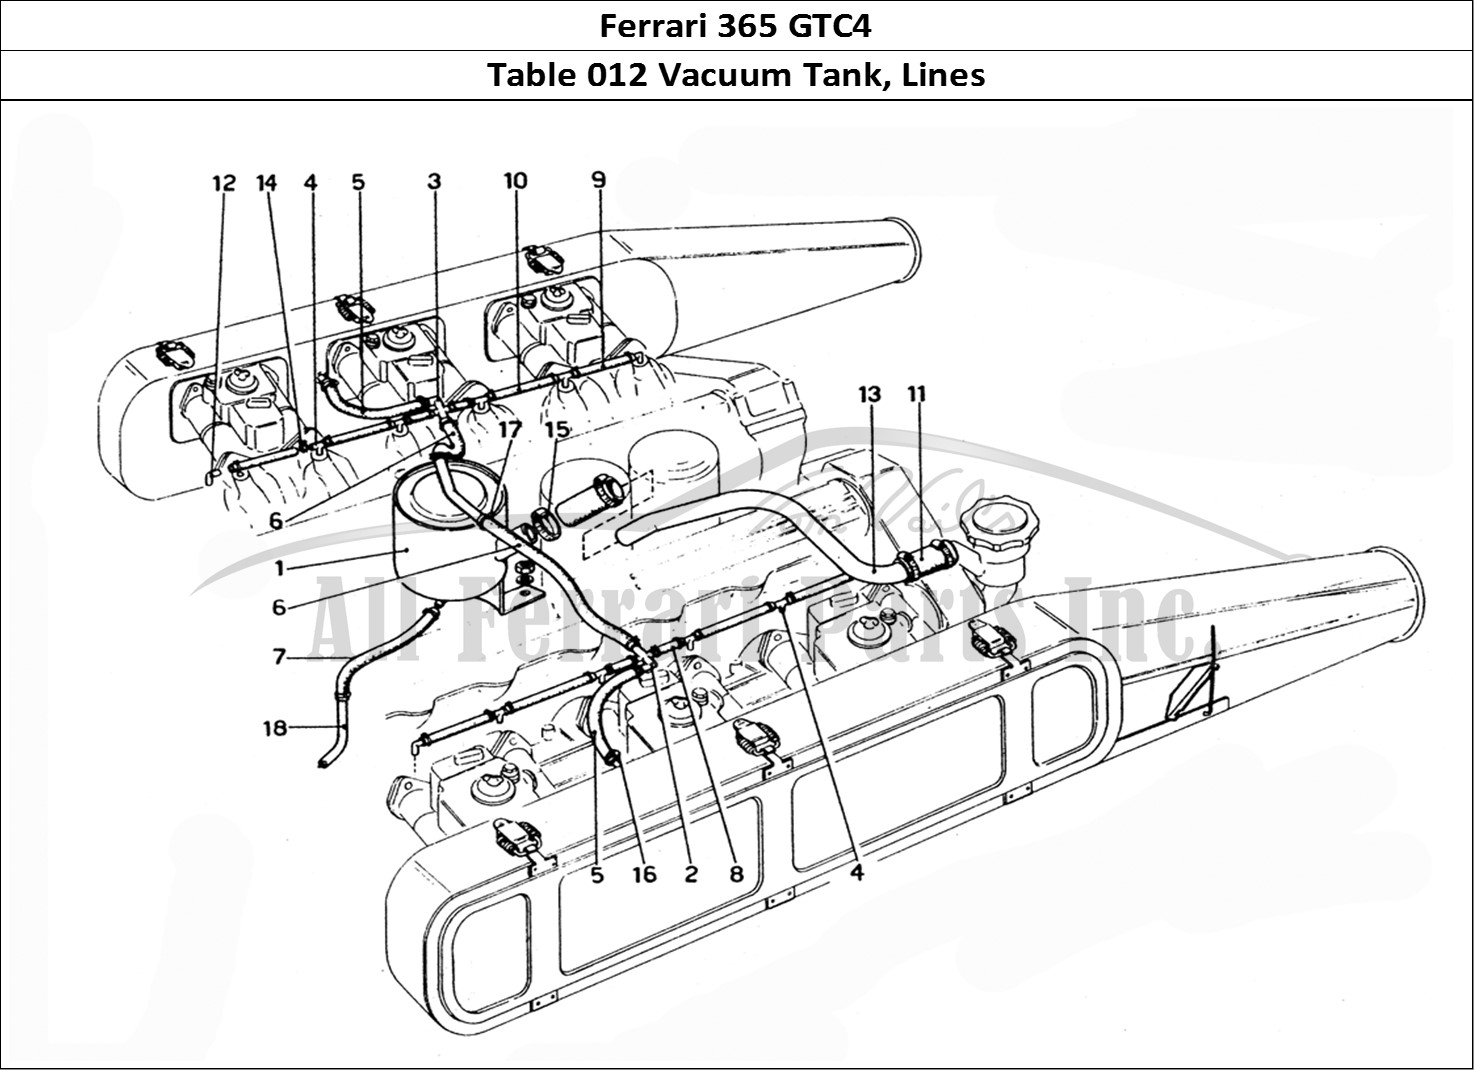 Ferrari Parts Ferrari 365 GTC4 (Mechanical) Page 012 Vacum tank